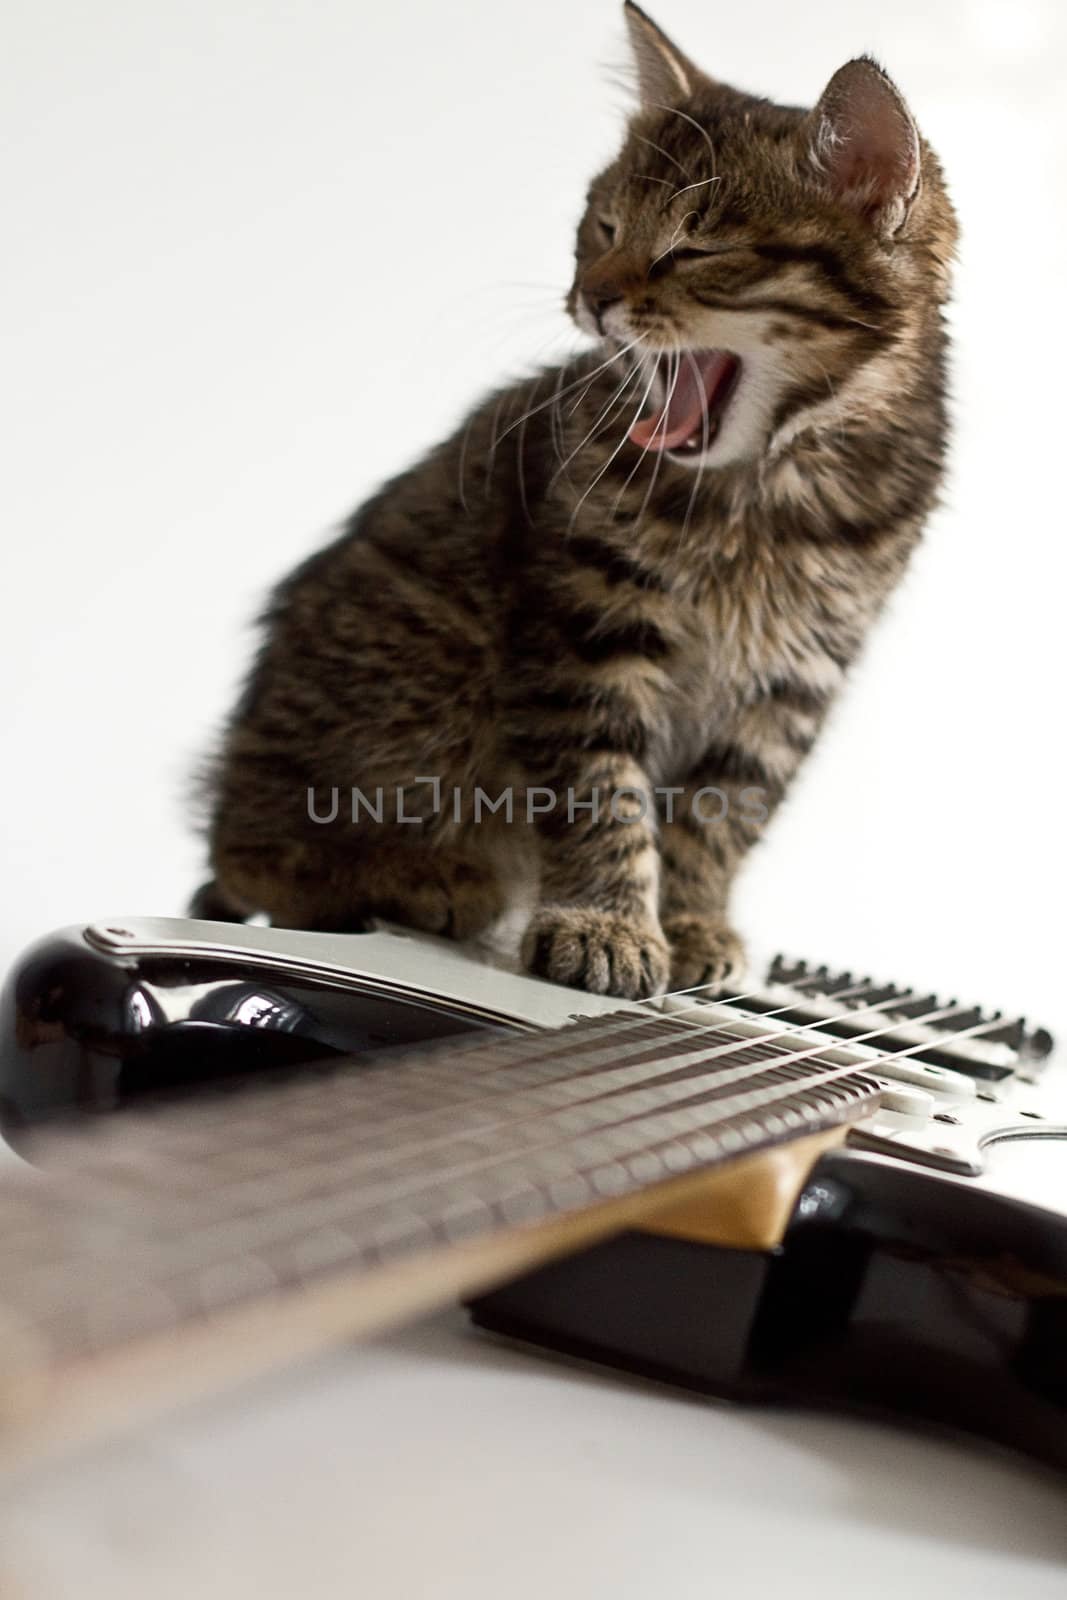 Little kitten kuril bobtail plaing guitar and singing  isolated on white